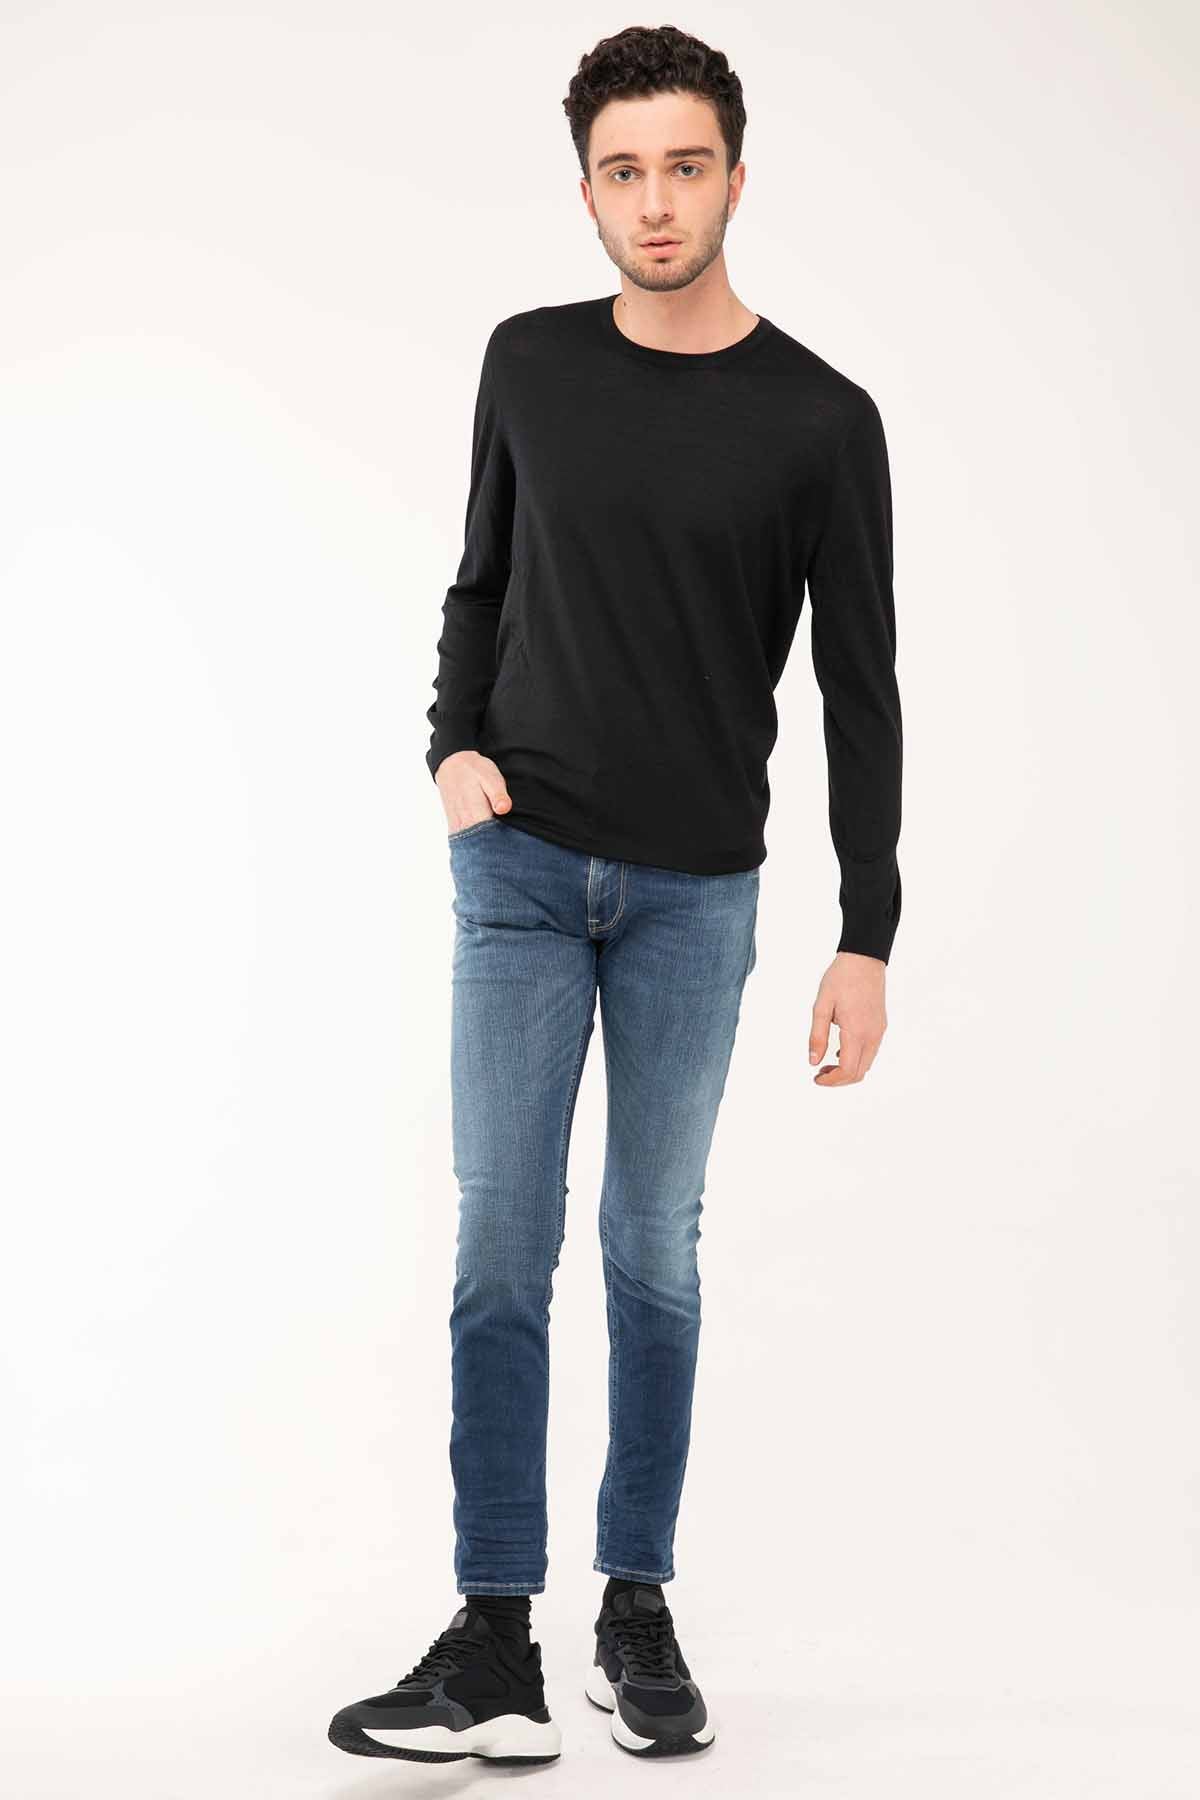 Replay Hyperflex Re-Used Slim Fit Jondrill Jeans-Libas Trendy Fashion Store